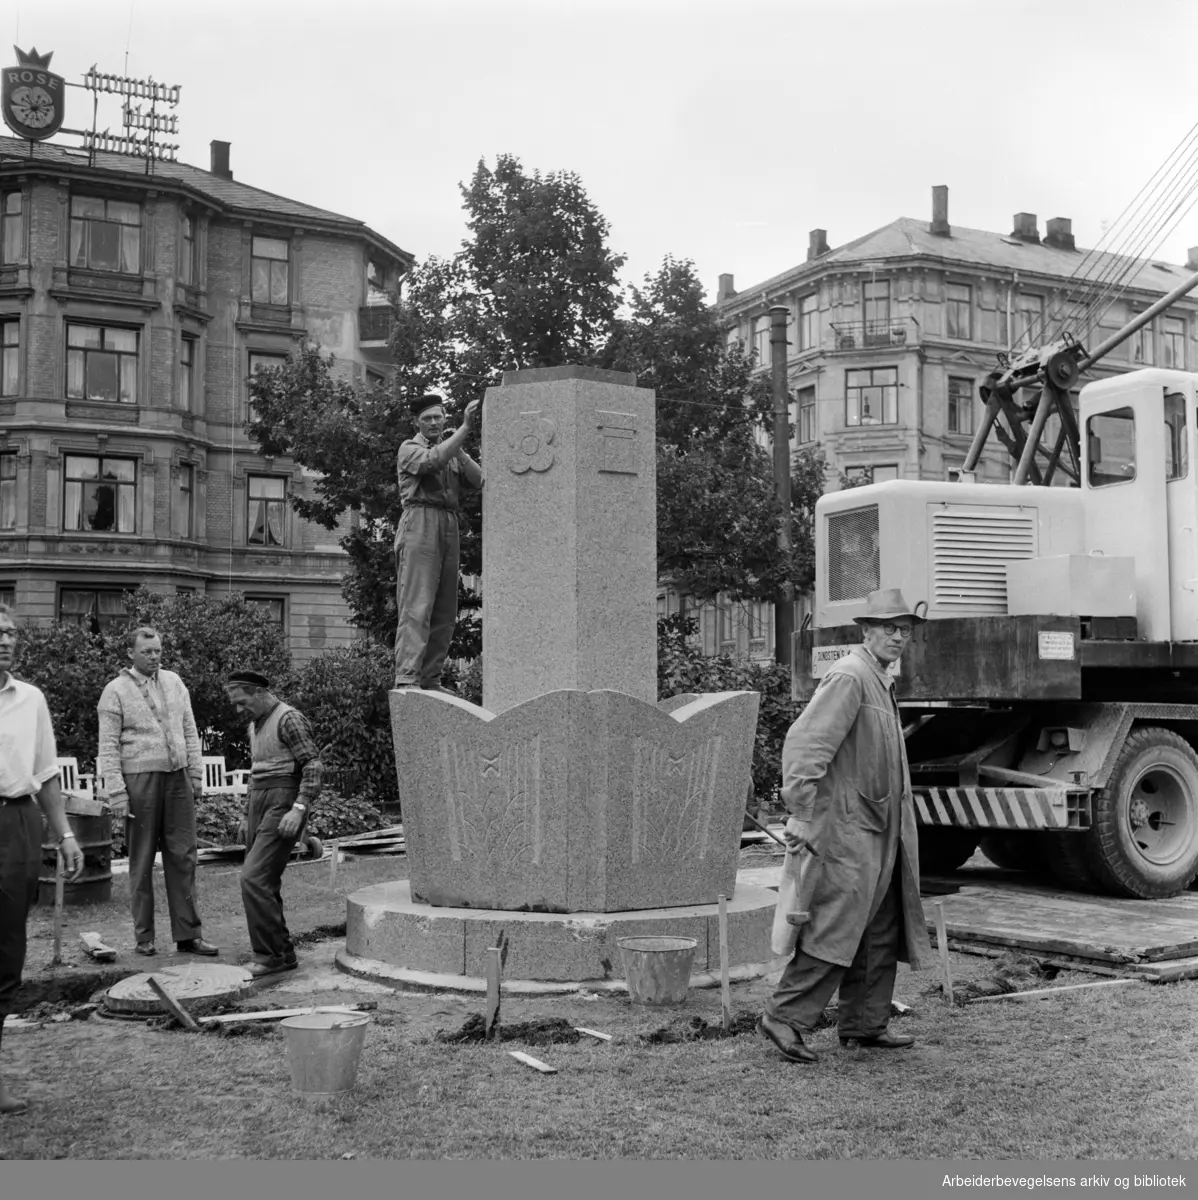 Valkyrie plass. Nic. Schiølls skulptur "Piken med vinranken" settes opp. September 1960